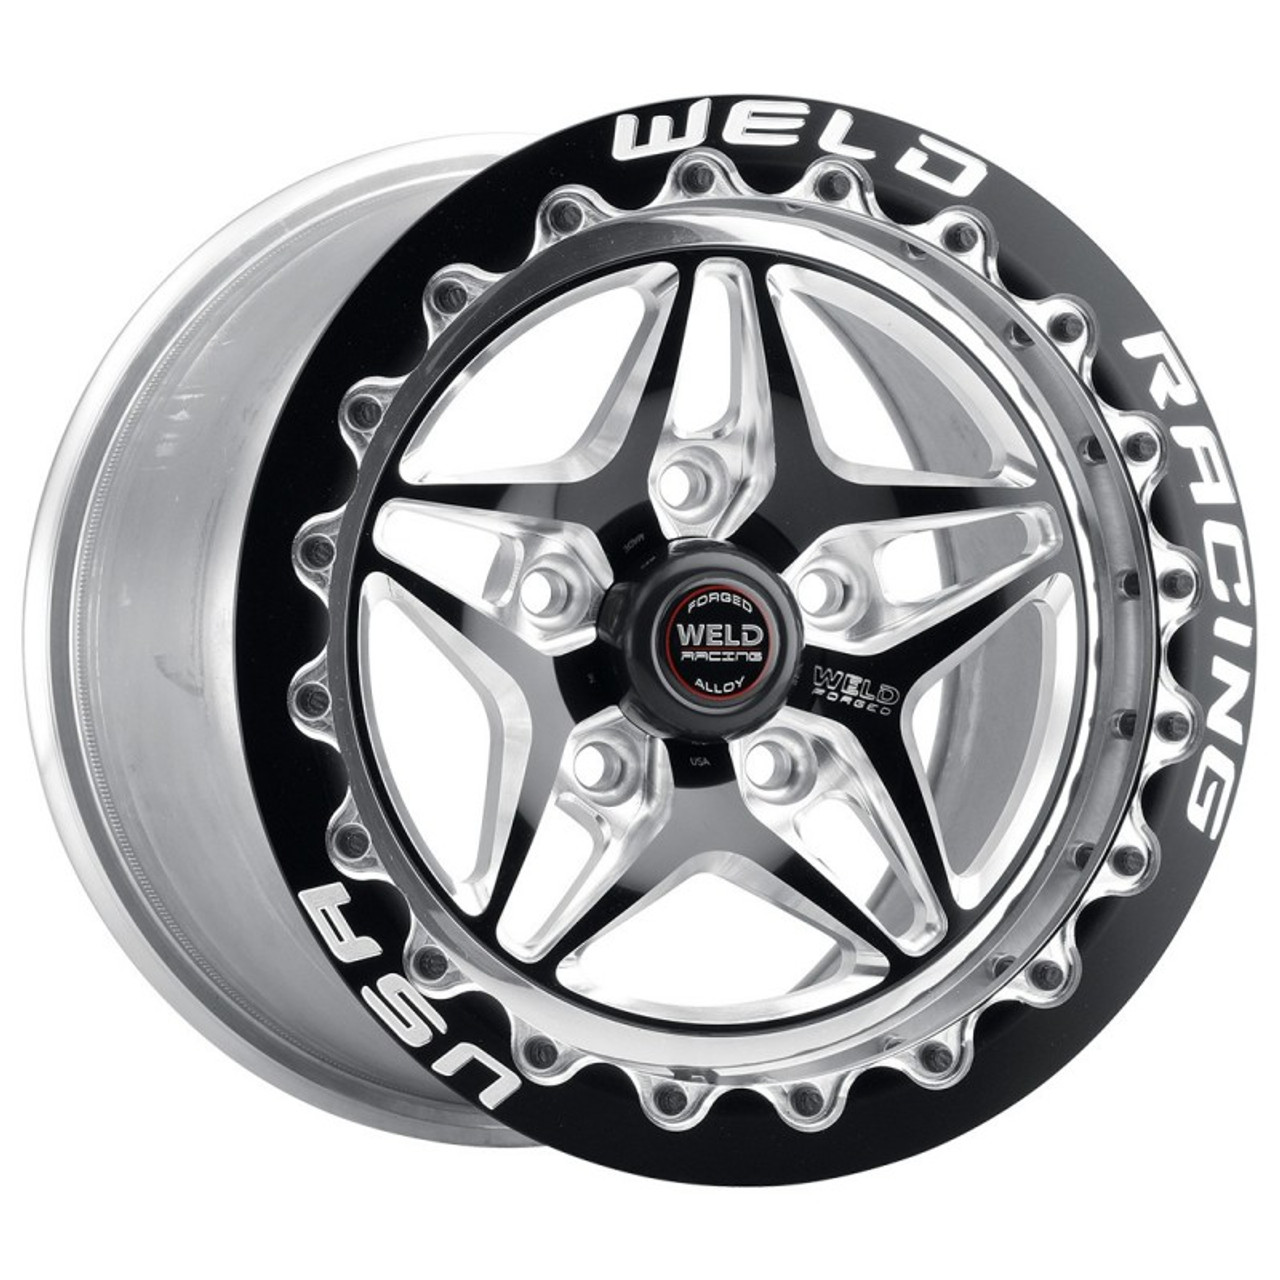 Weld Wheels - 15x10" RT-S S81 Beadlock Rear Wheel - C6 / C7 Corvette Z06